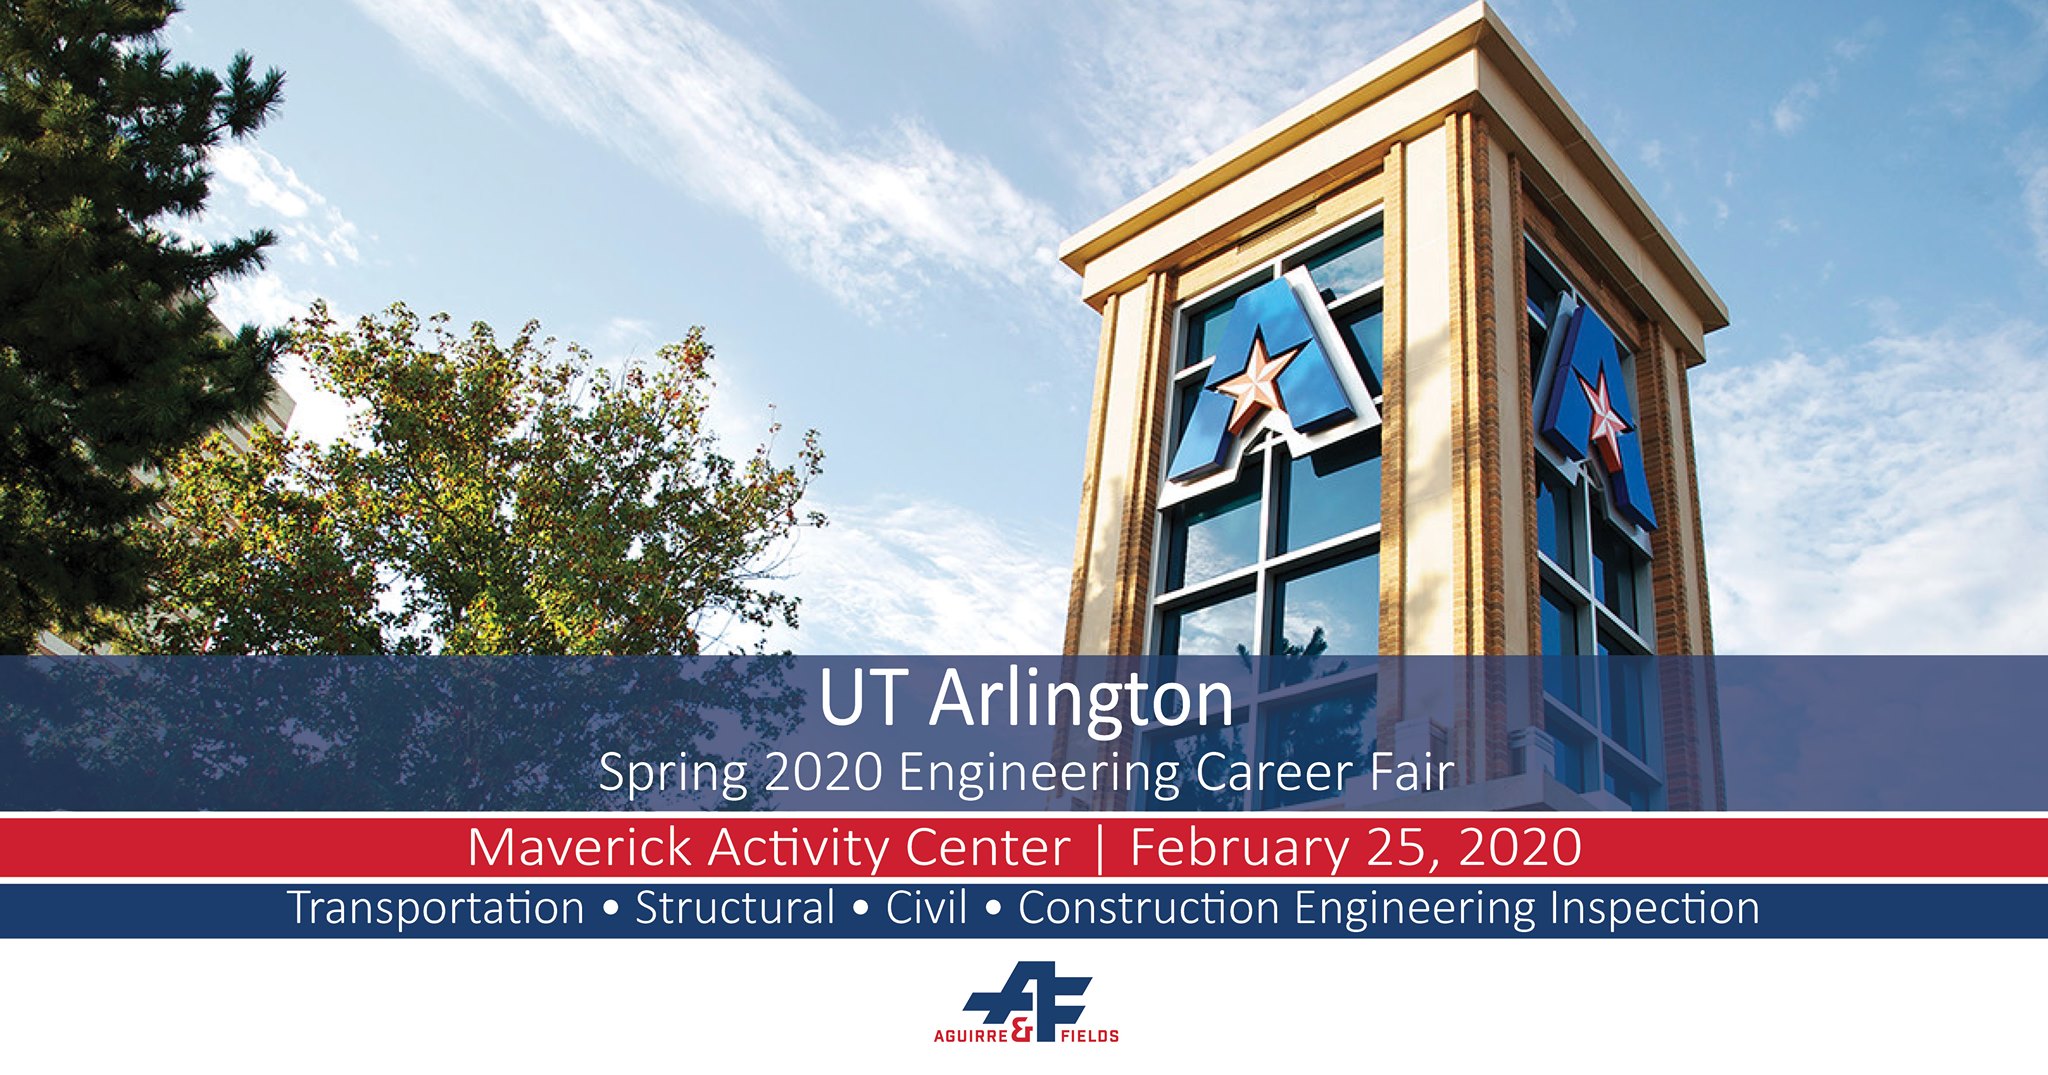 UT Arlington Recruiting events post